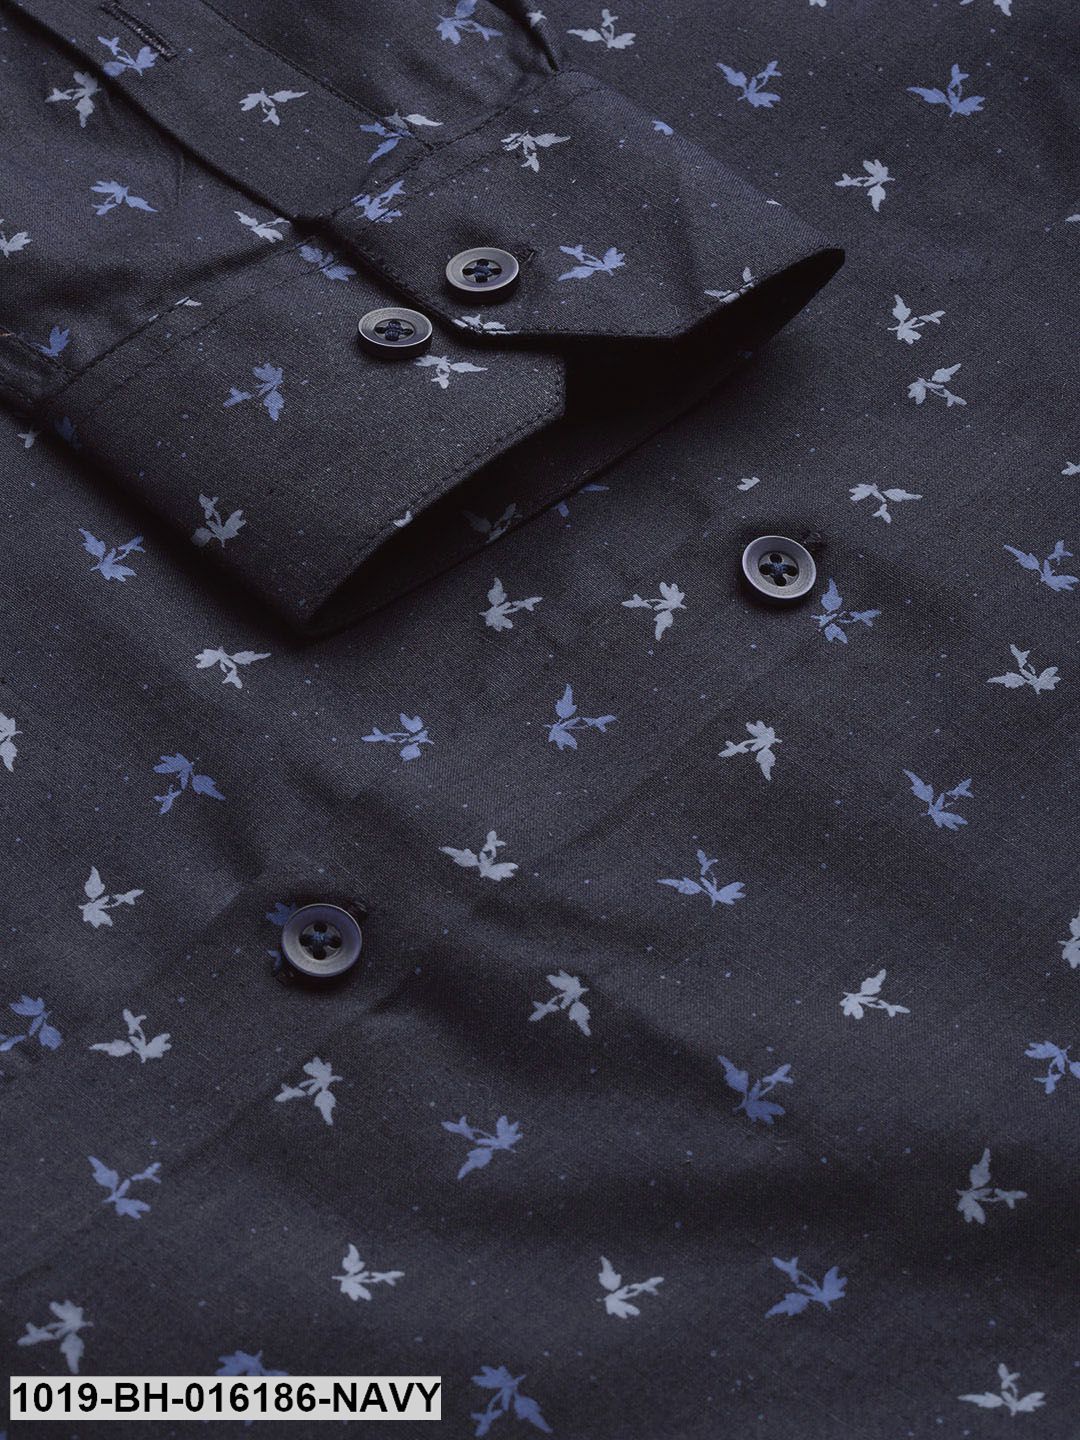 Men's Cotton Navy Blue & Multi Printed Formal Shirt - Sojanya